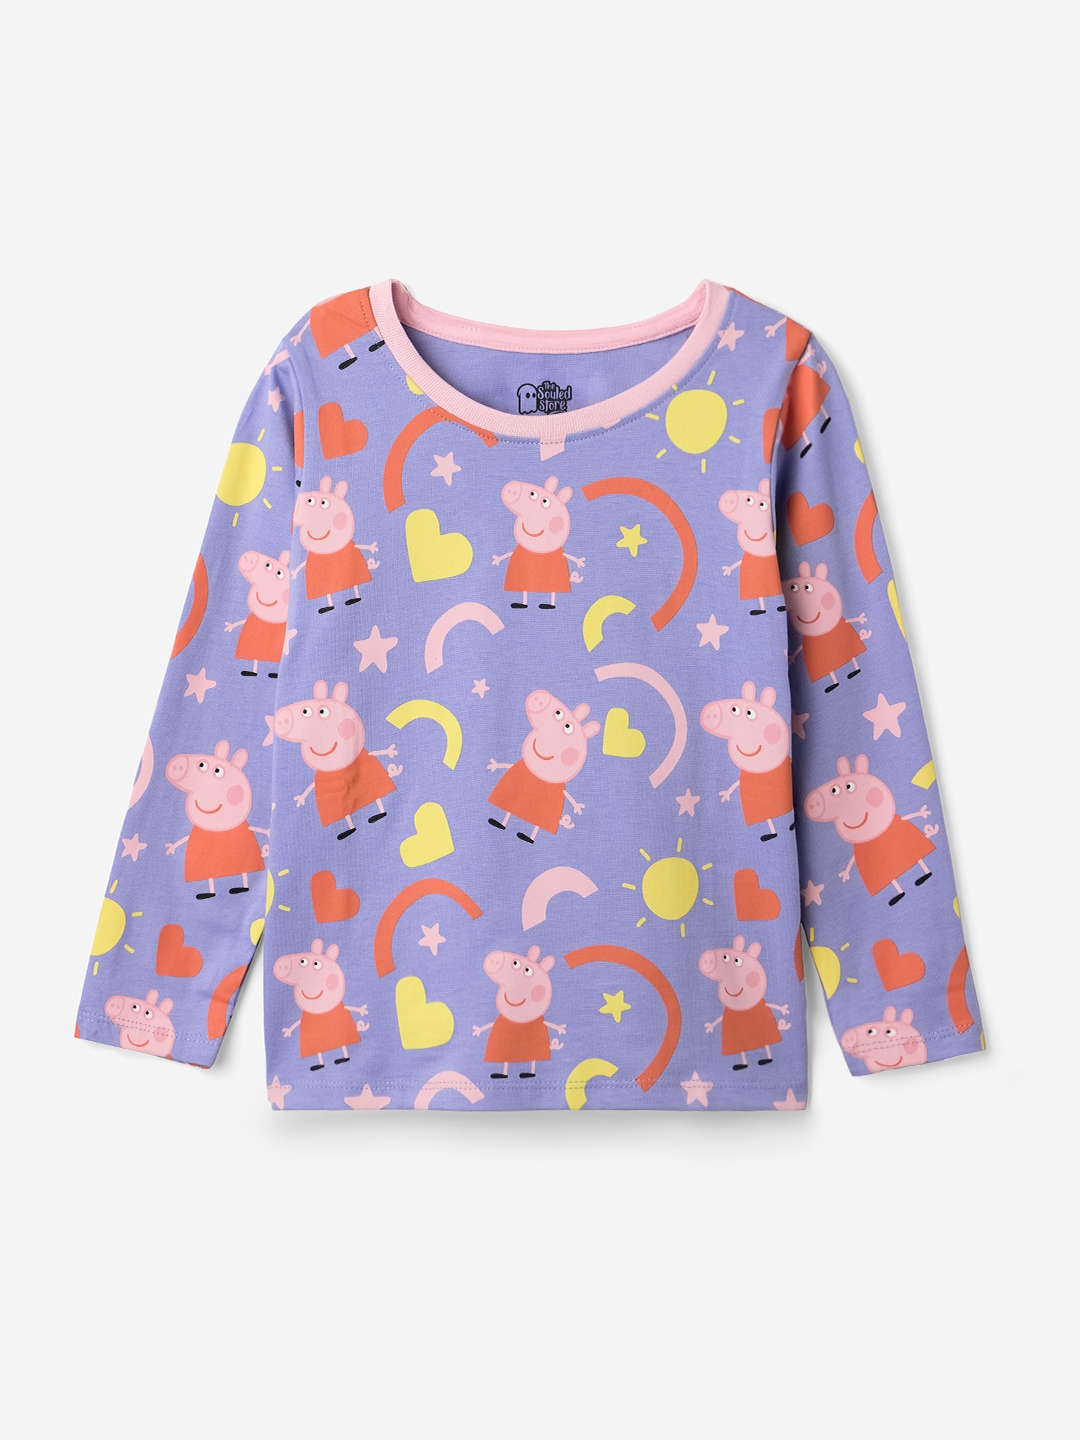 Girls Peppa Pig Sunshine Cotton PrintedT-Shirts